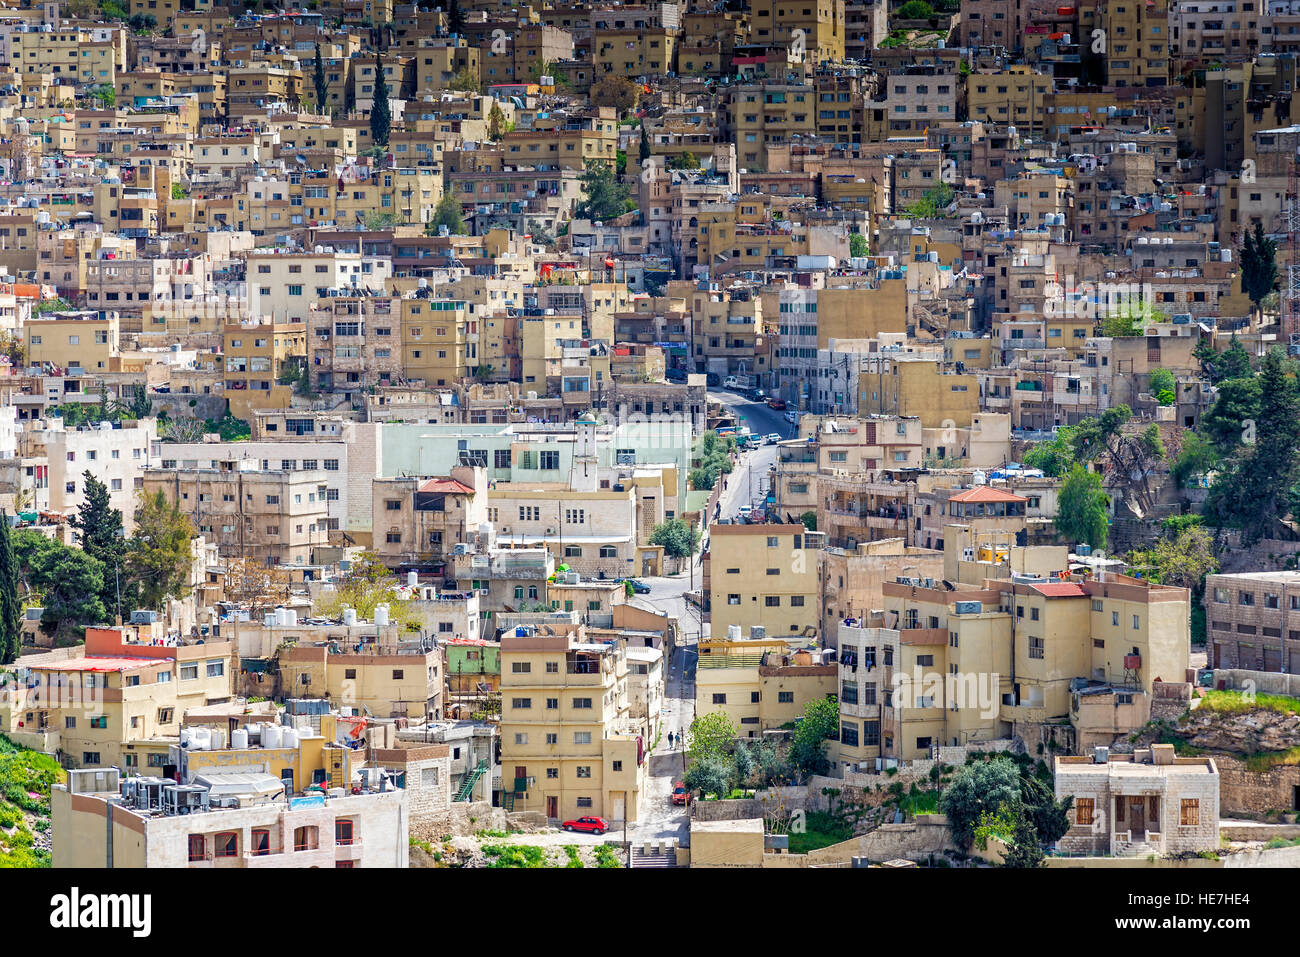 Amman, Jordan - April 03, 2015: Close up view of Al Yarmouk district in Amman, the capital and most populous city of Jordan Stock Photo